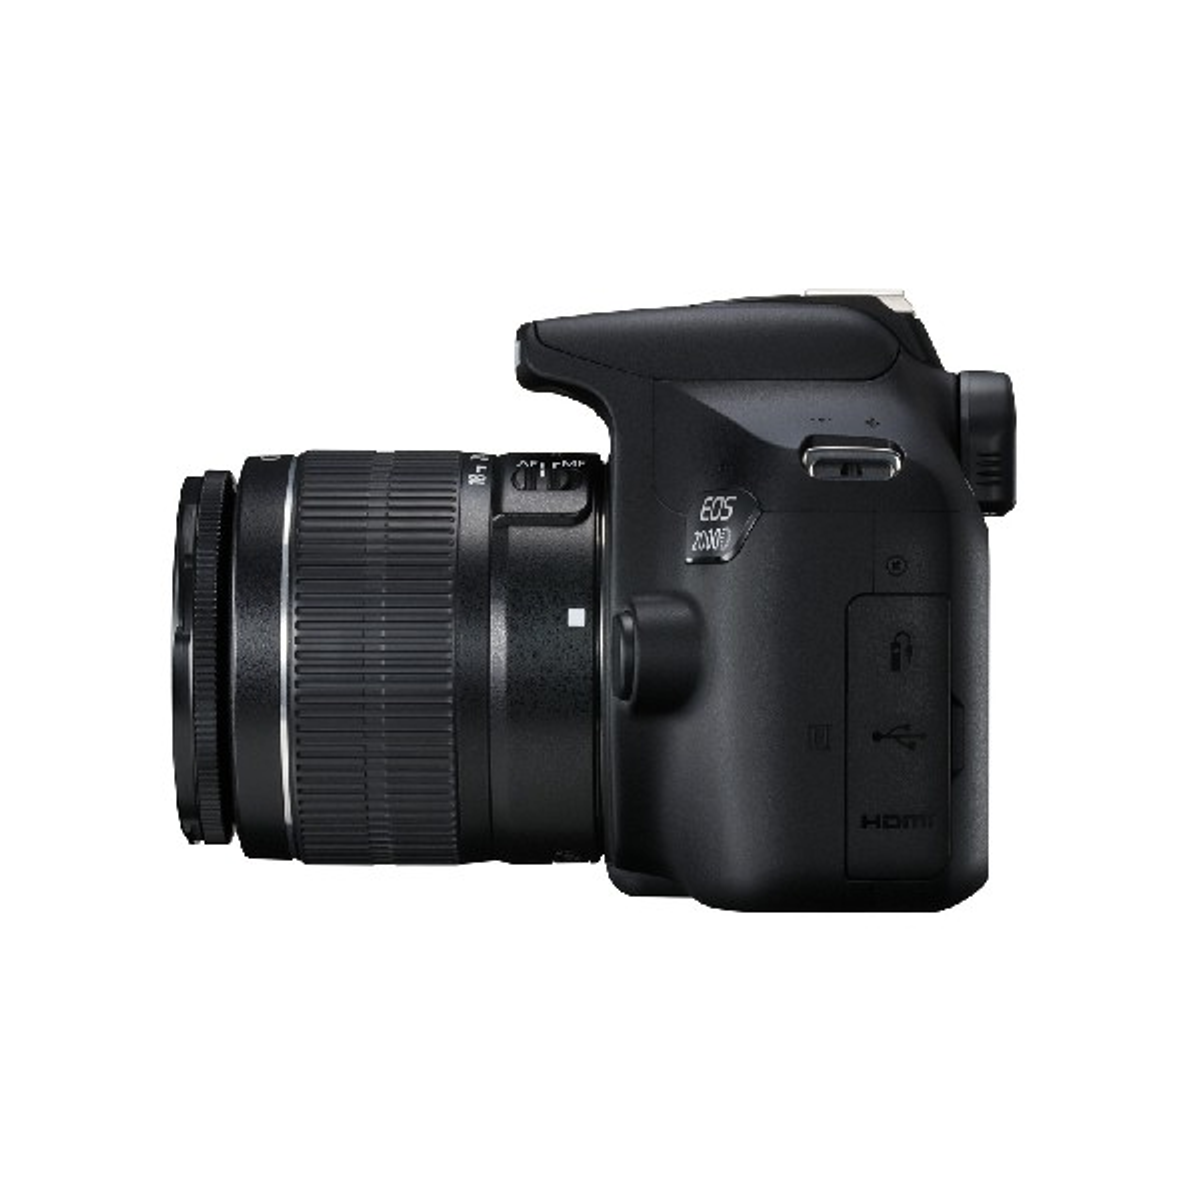 CANON EOS 2000 D 18-55 mm Full-HD, WLAN, Megapixel, Objektiv +SB130+16GB 18-55 24,1 (EF-S), Schwarz Spiegelreflexkamera